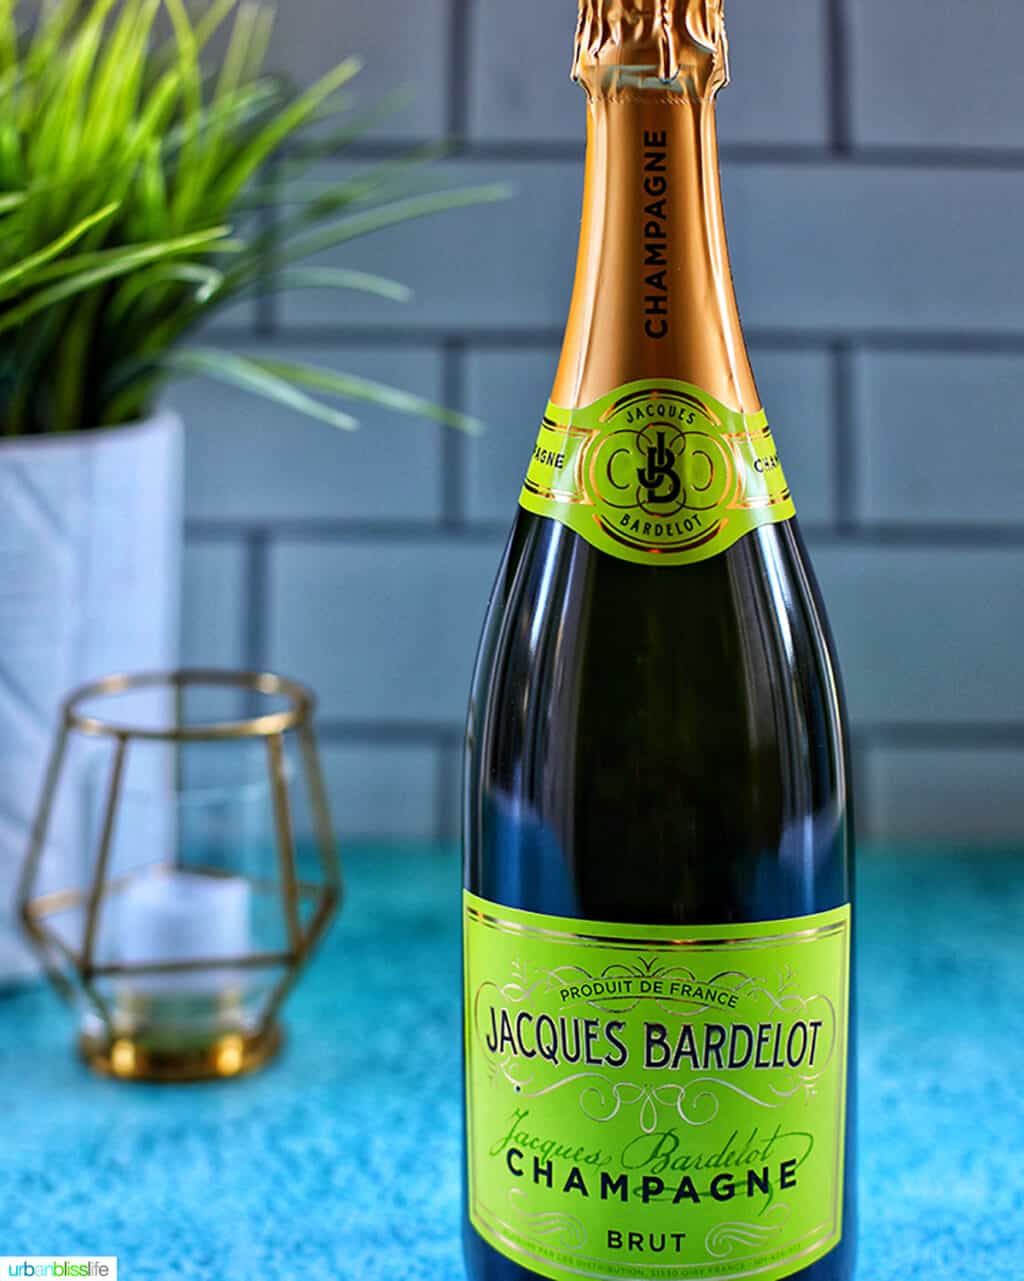 Jacques Bardelot Champagne bottle